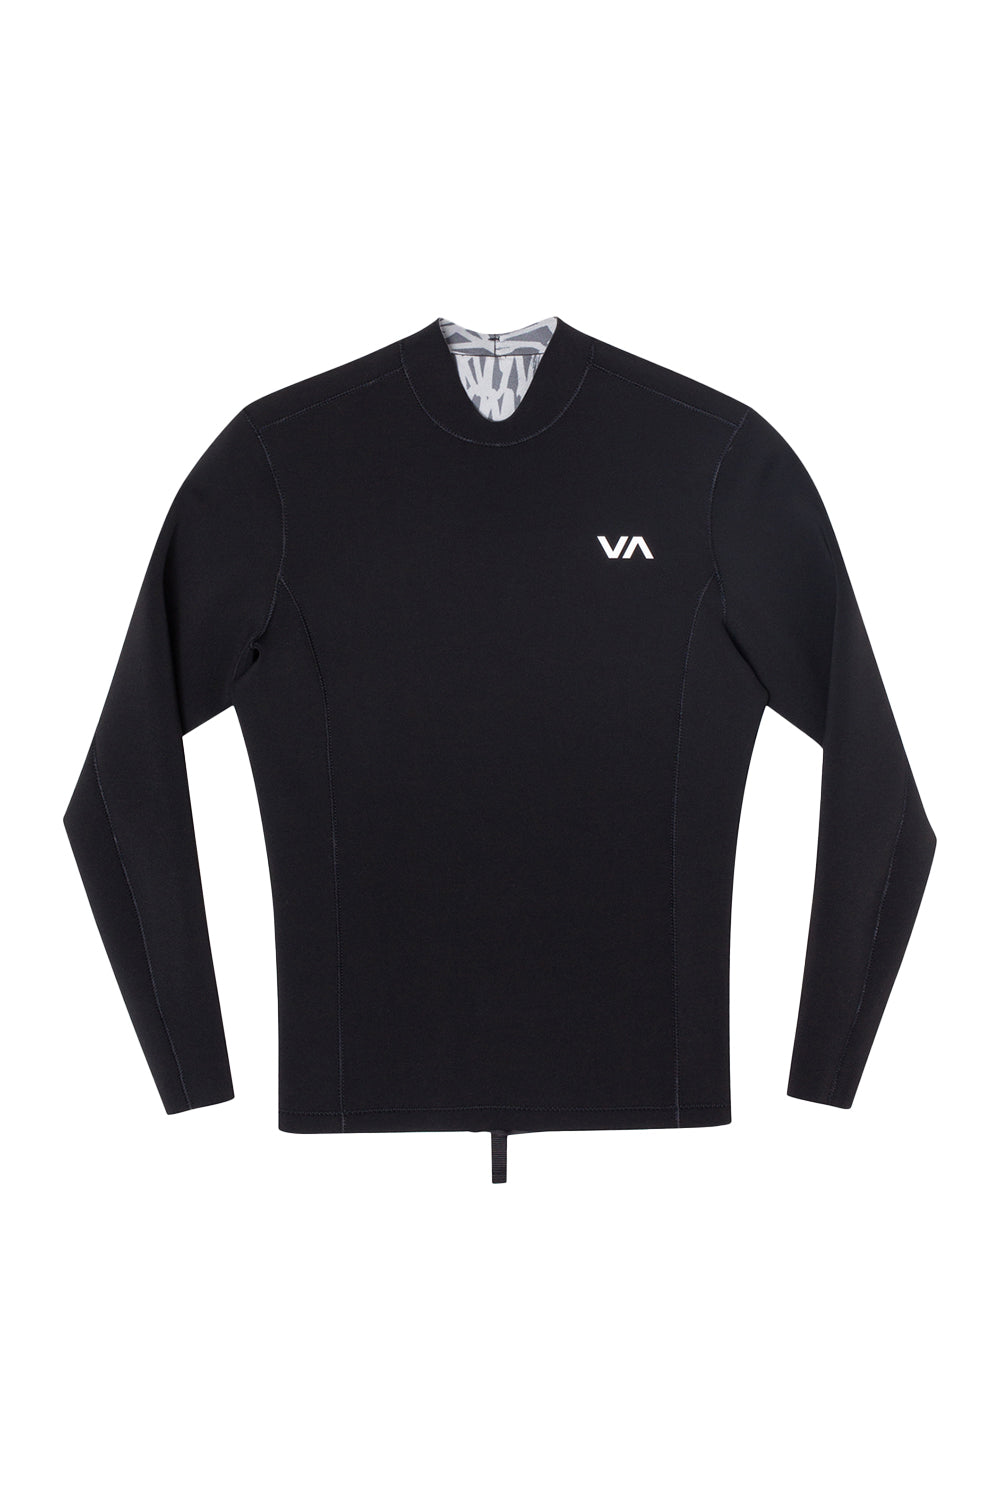 RVCA Mens Balance Back Zip Wetsuit Jacket